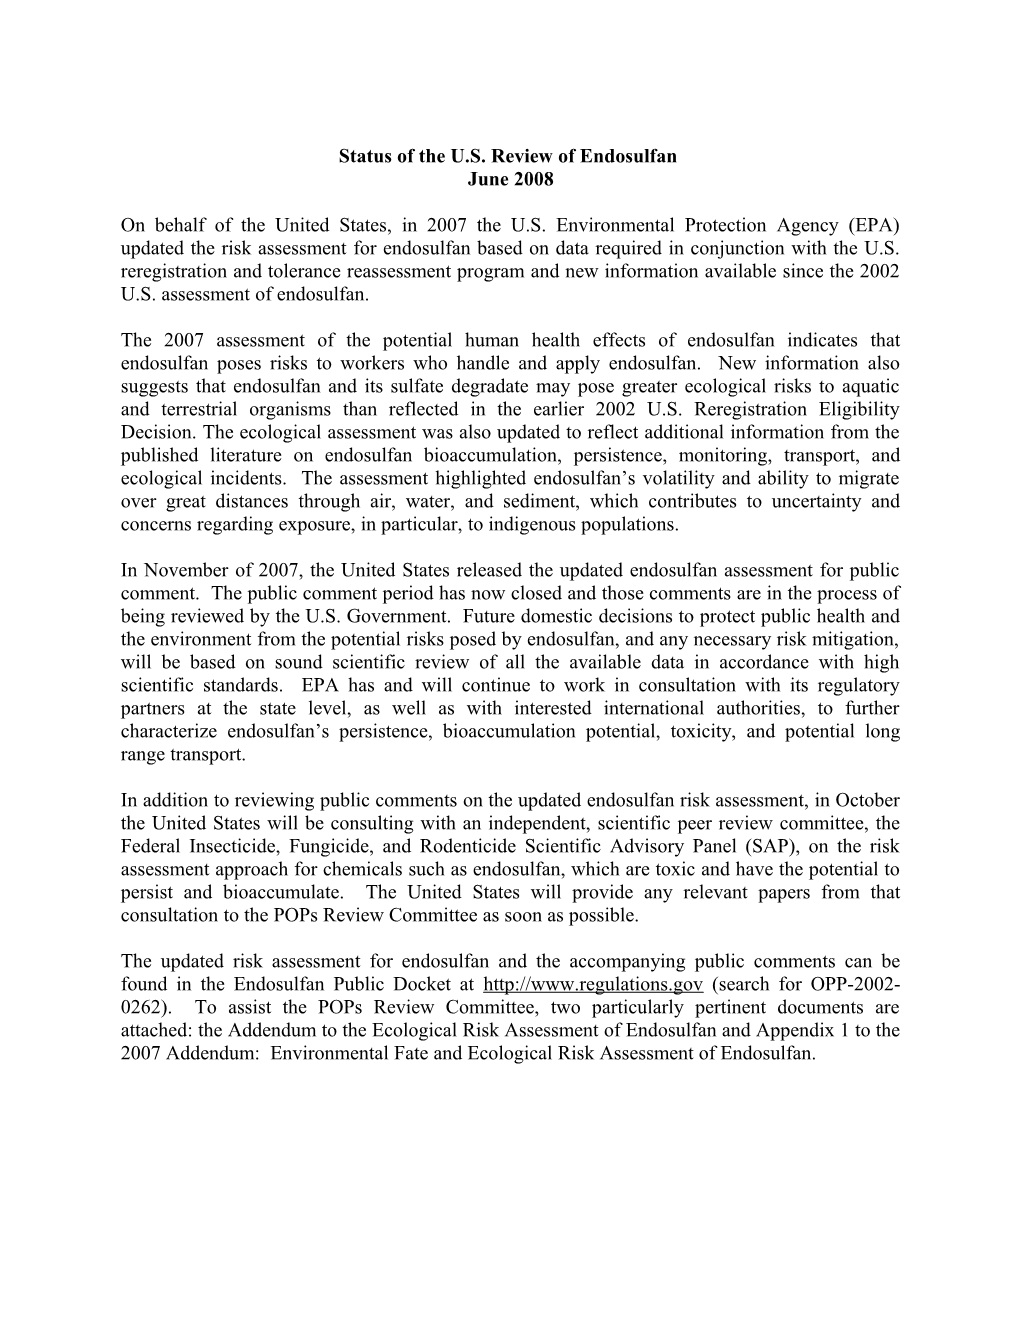 USEPA Statement on Status of Review of Endosulfan